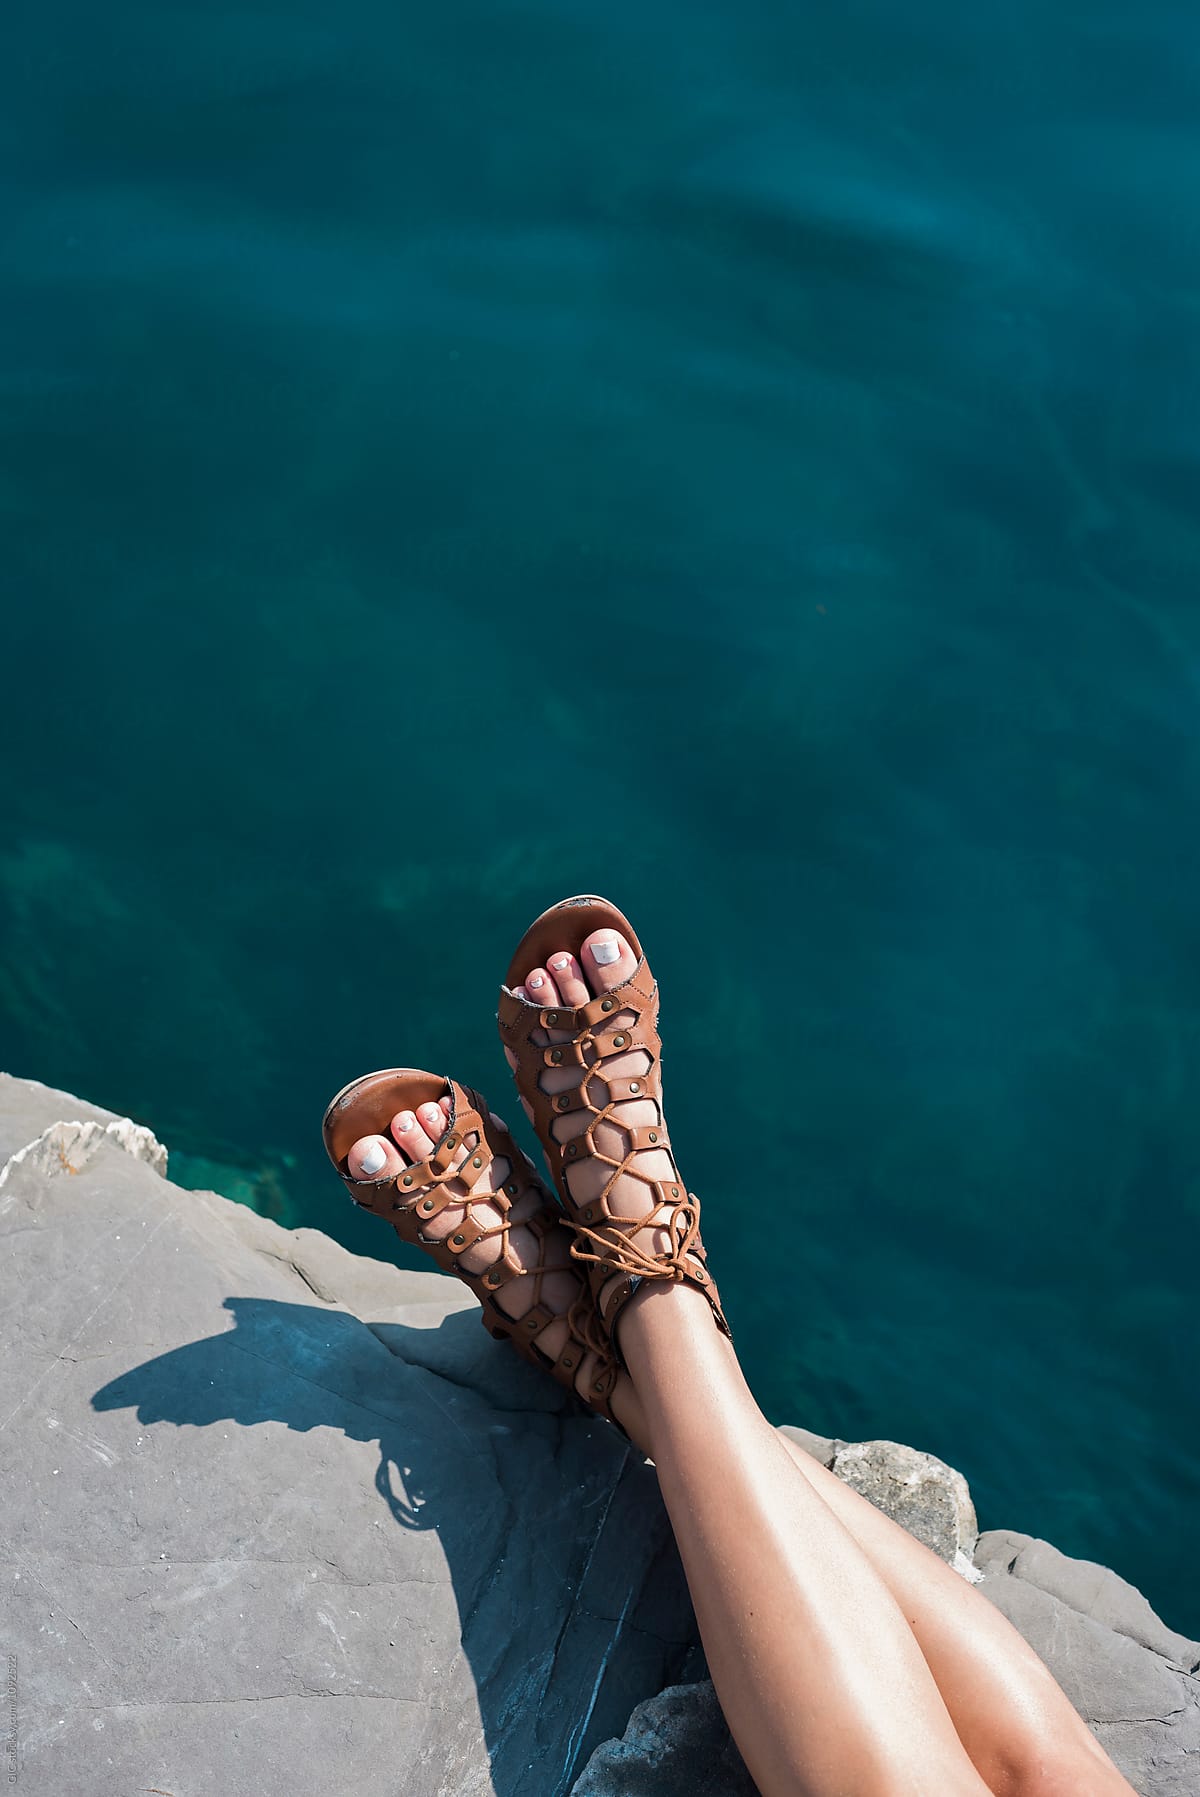 Foot wearing sandals against water